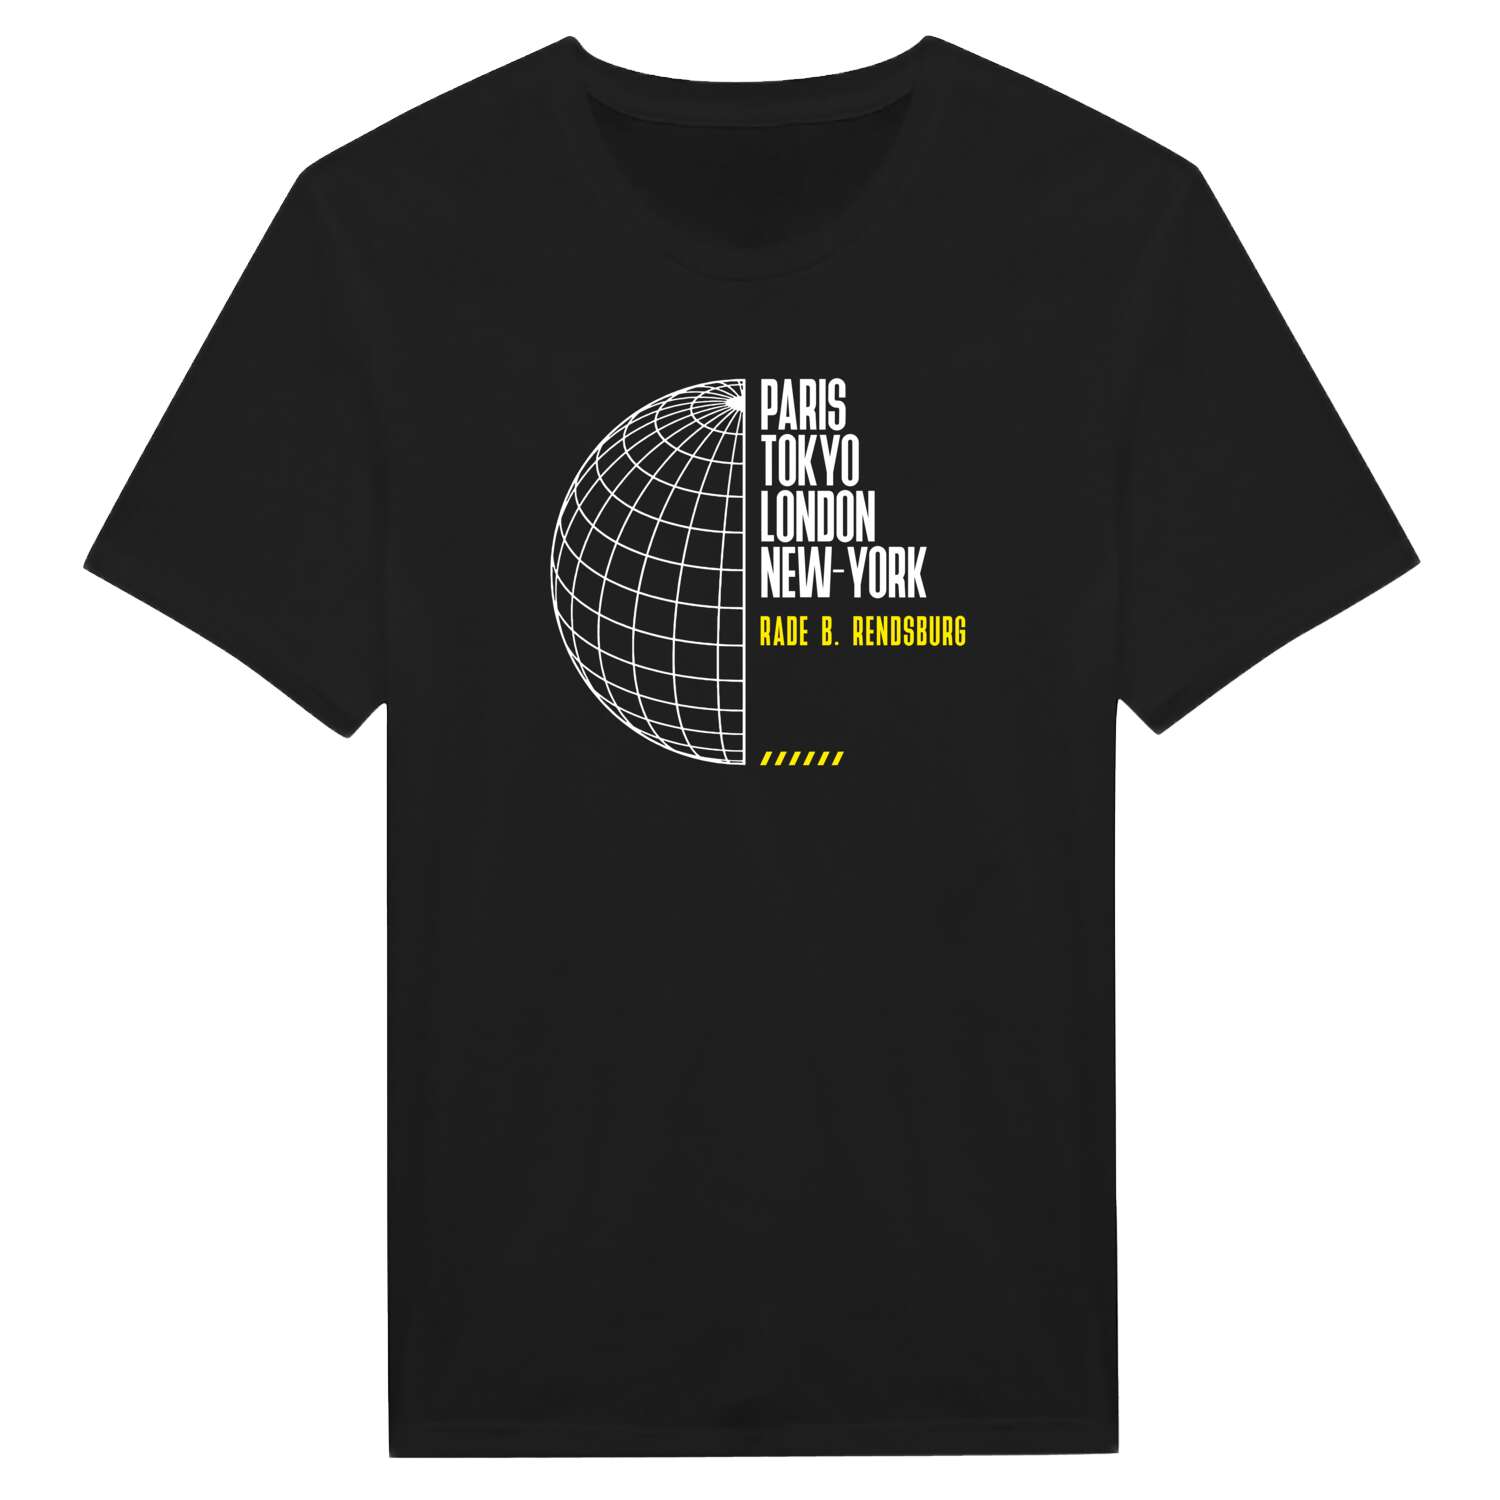 Rade b. Rendsburg T-Shirt »Paris Tokyo London«